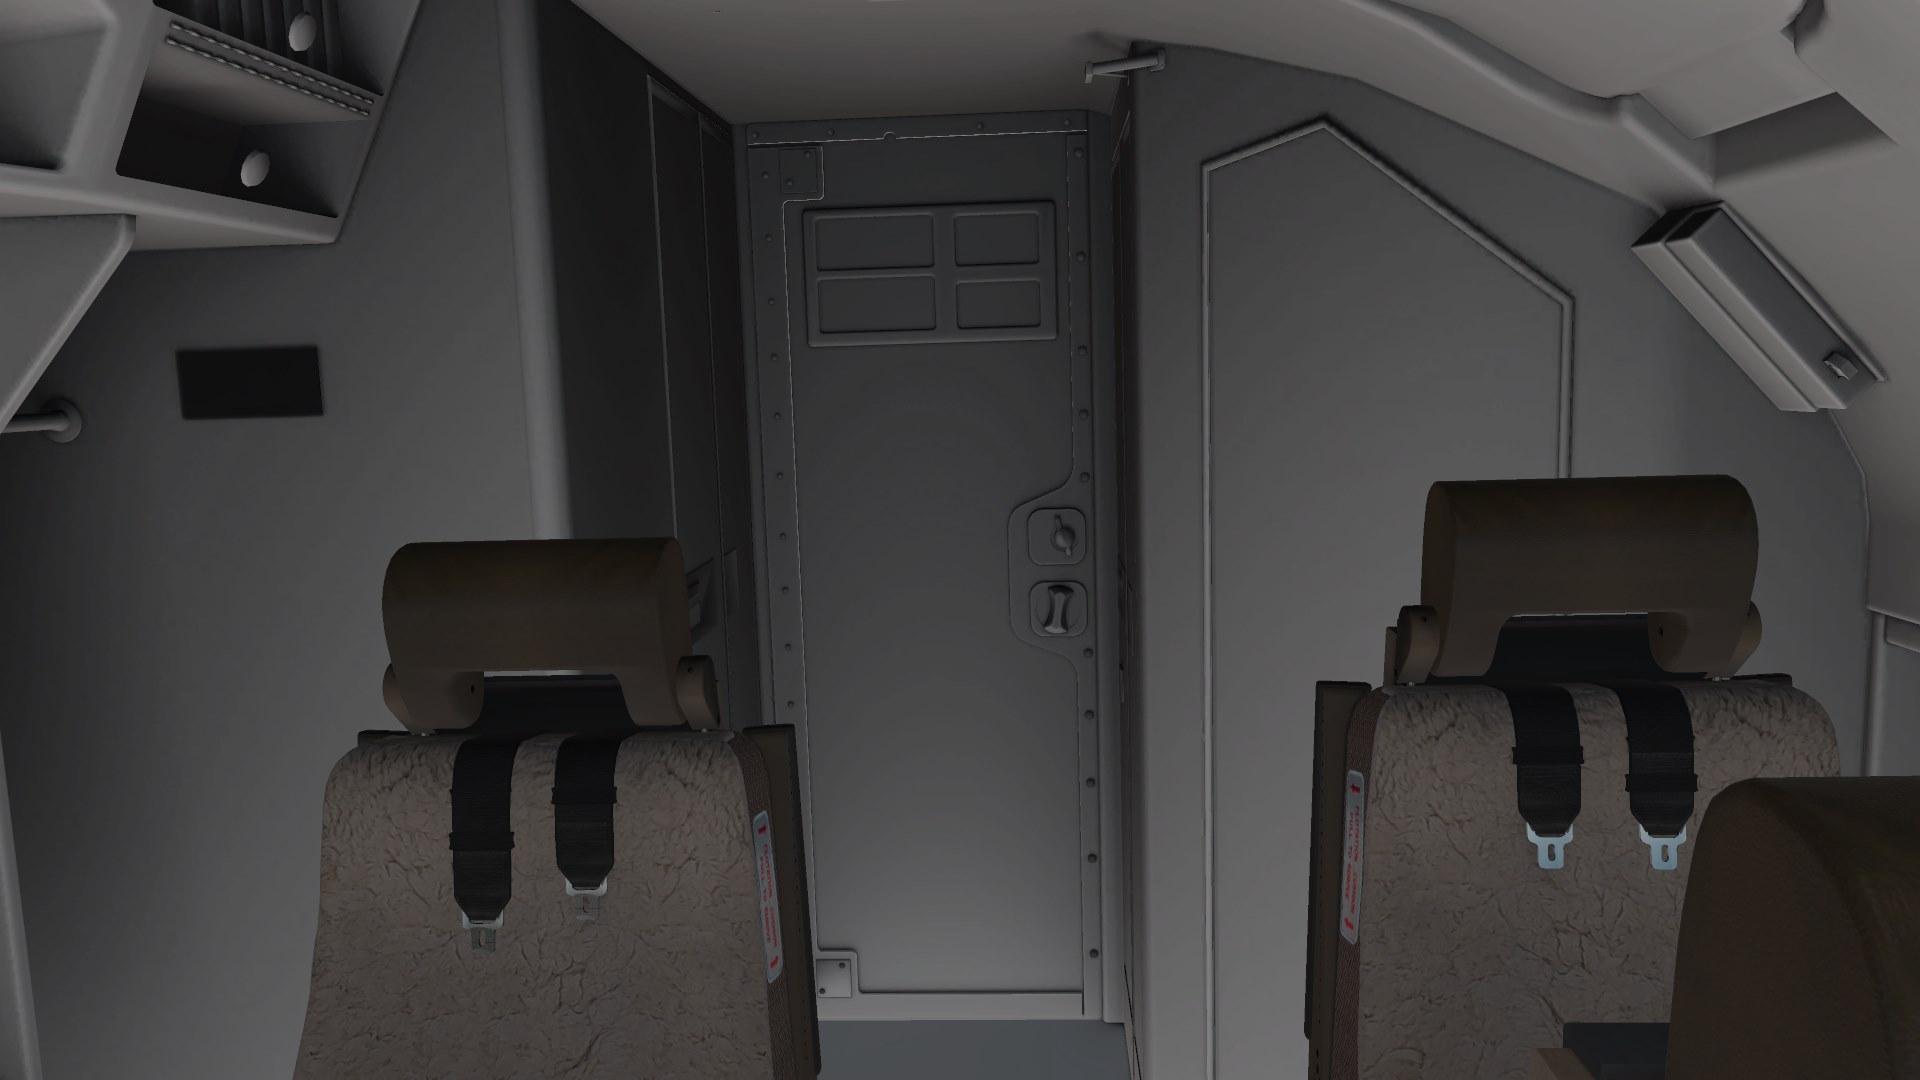 SSG Previews Upcoming 747 Cockpit Improvements - SSG, X-Plane